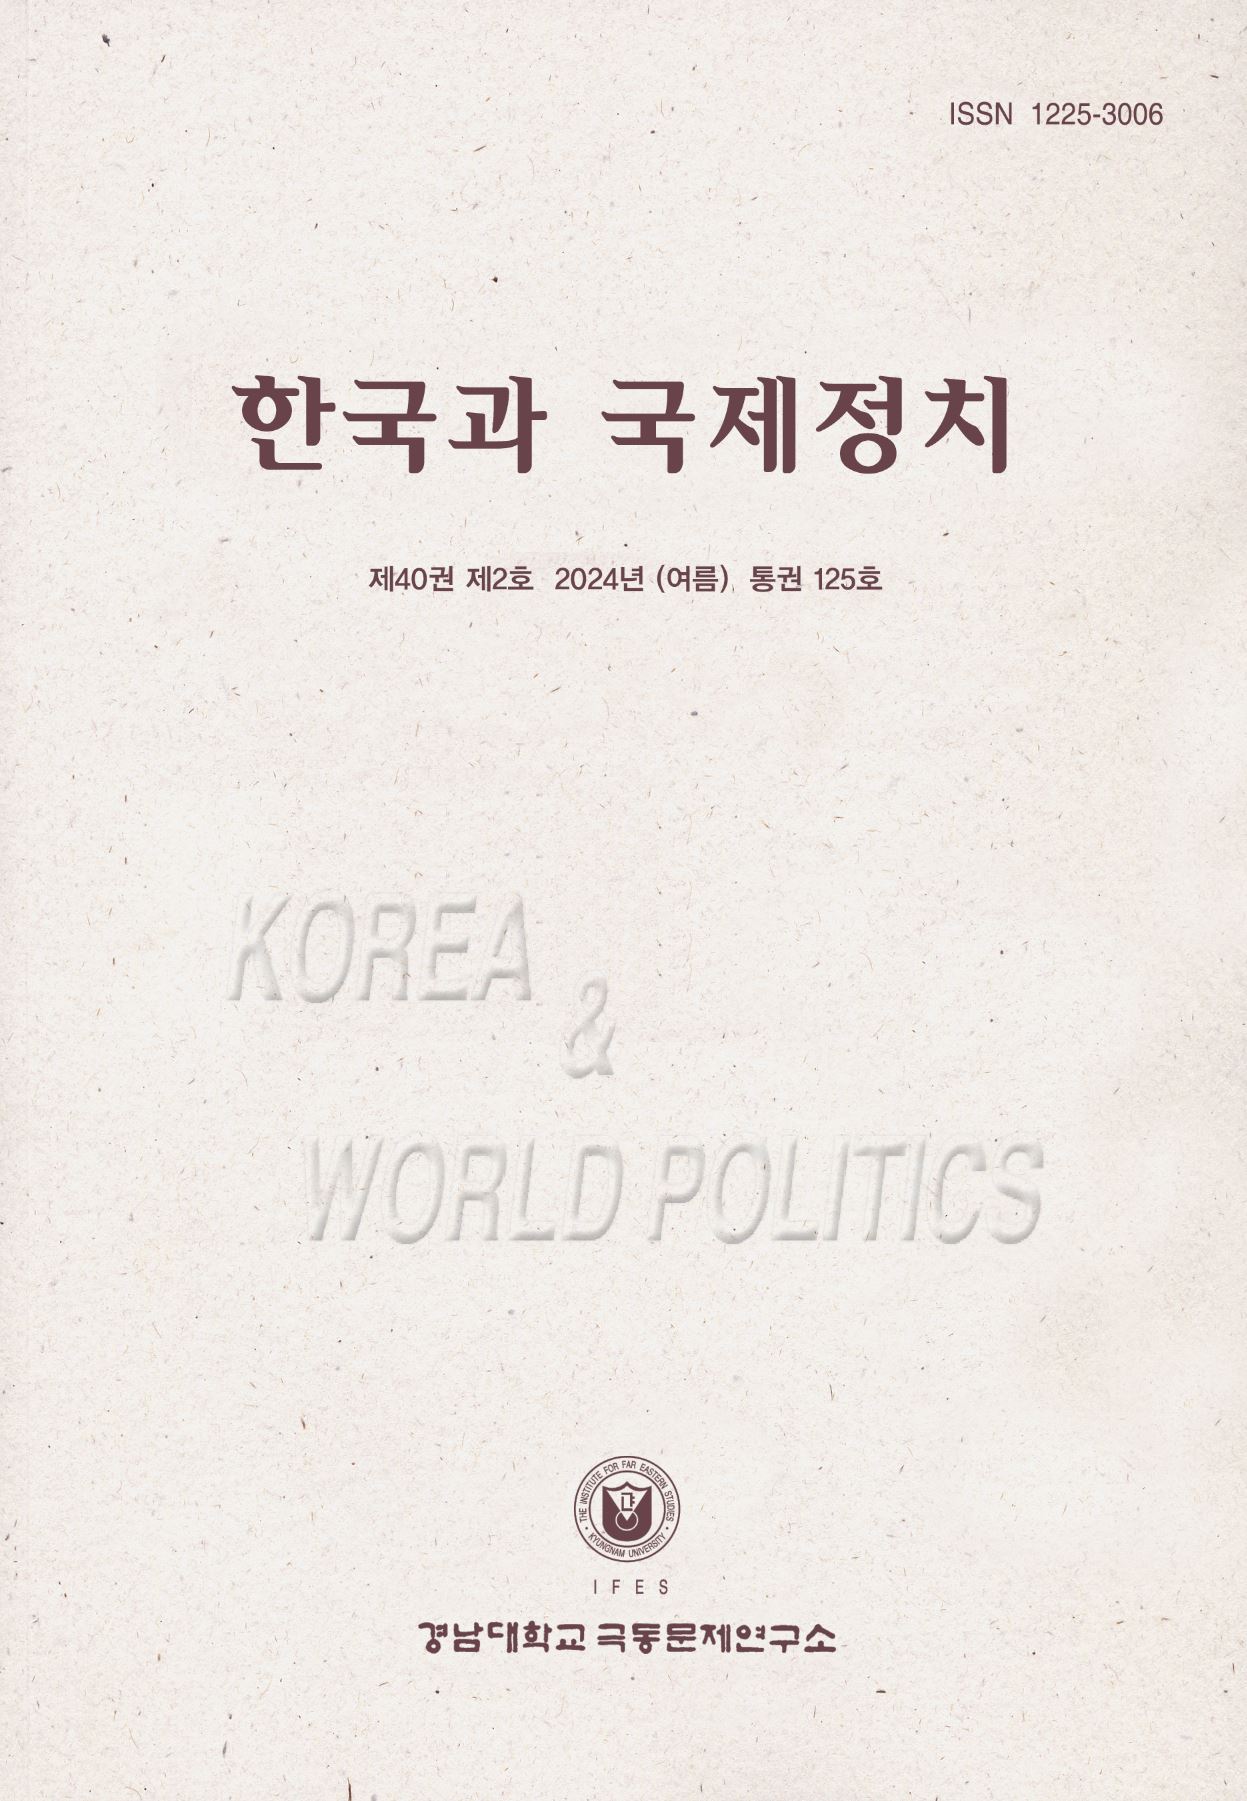 Korea and World Politics, Vol.40, No.2 Published 대표이미지